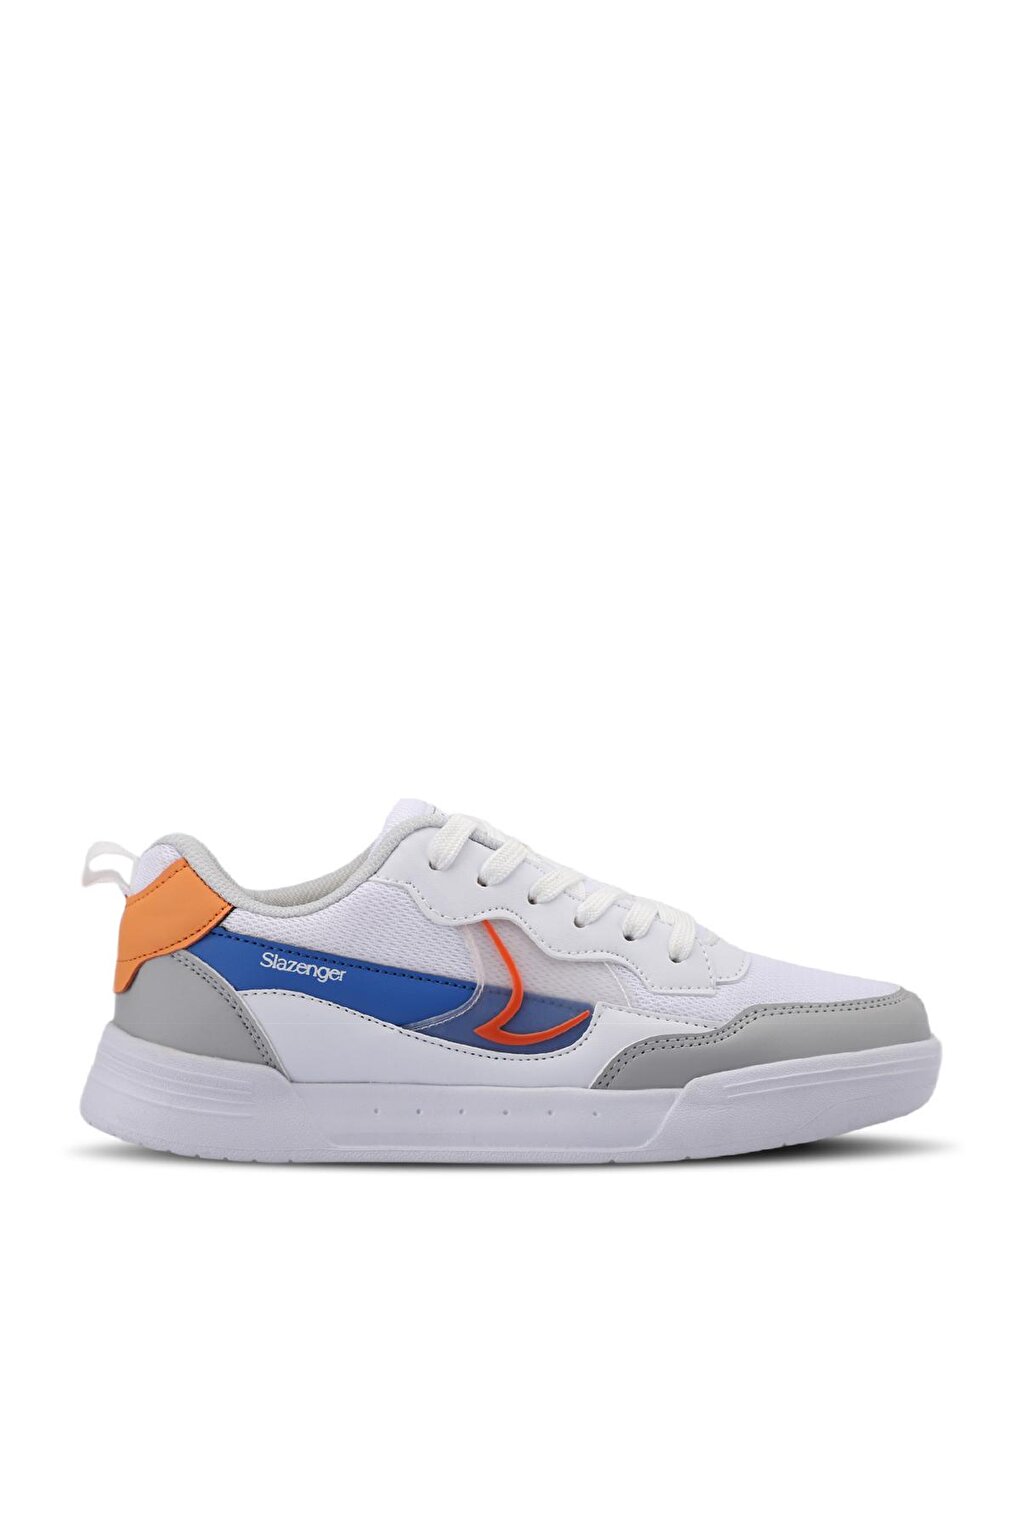 BARBRO Sneaker Женская обувь Белый/Оранжевый SLAZENGER